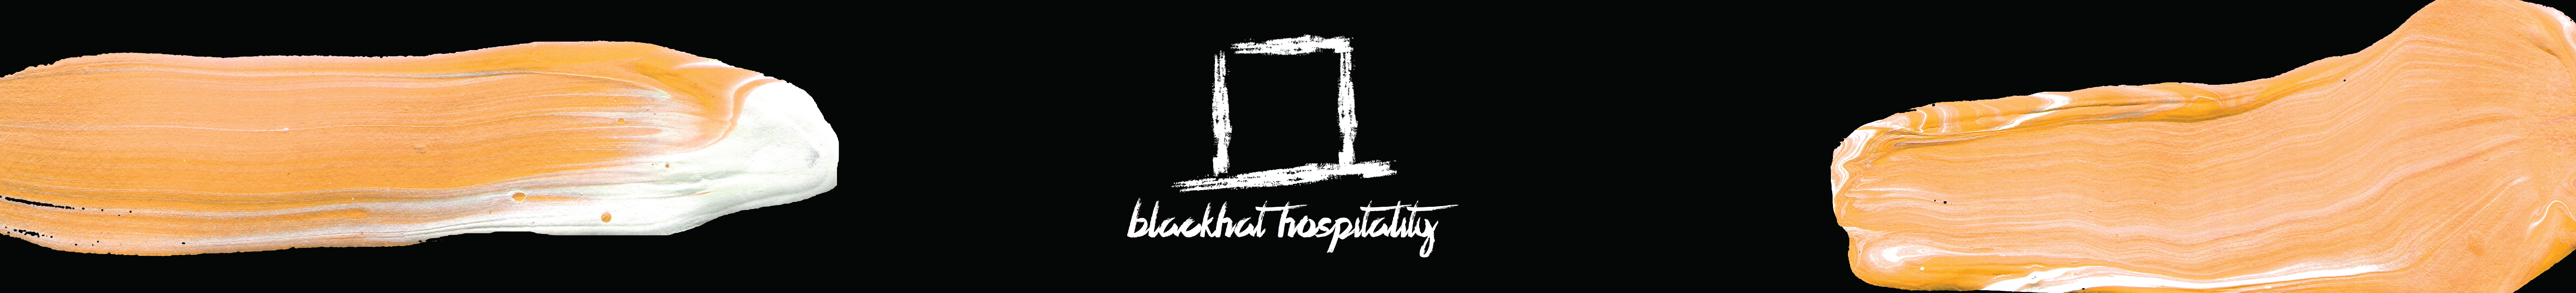 Blackhat Hospitality's profile banner